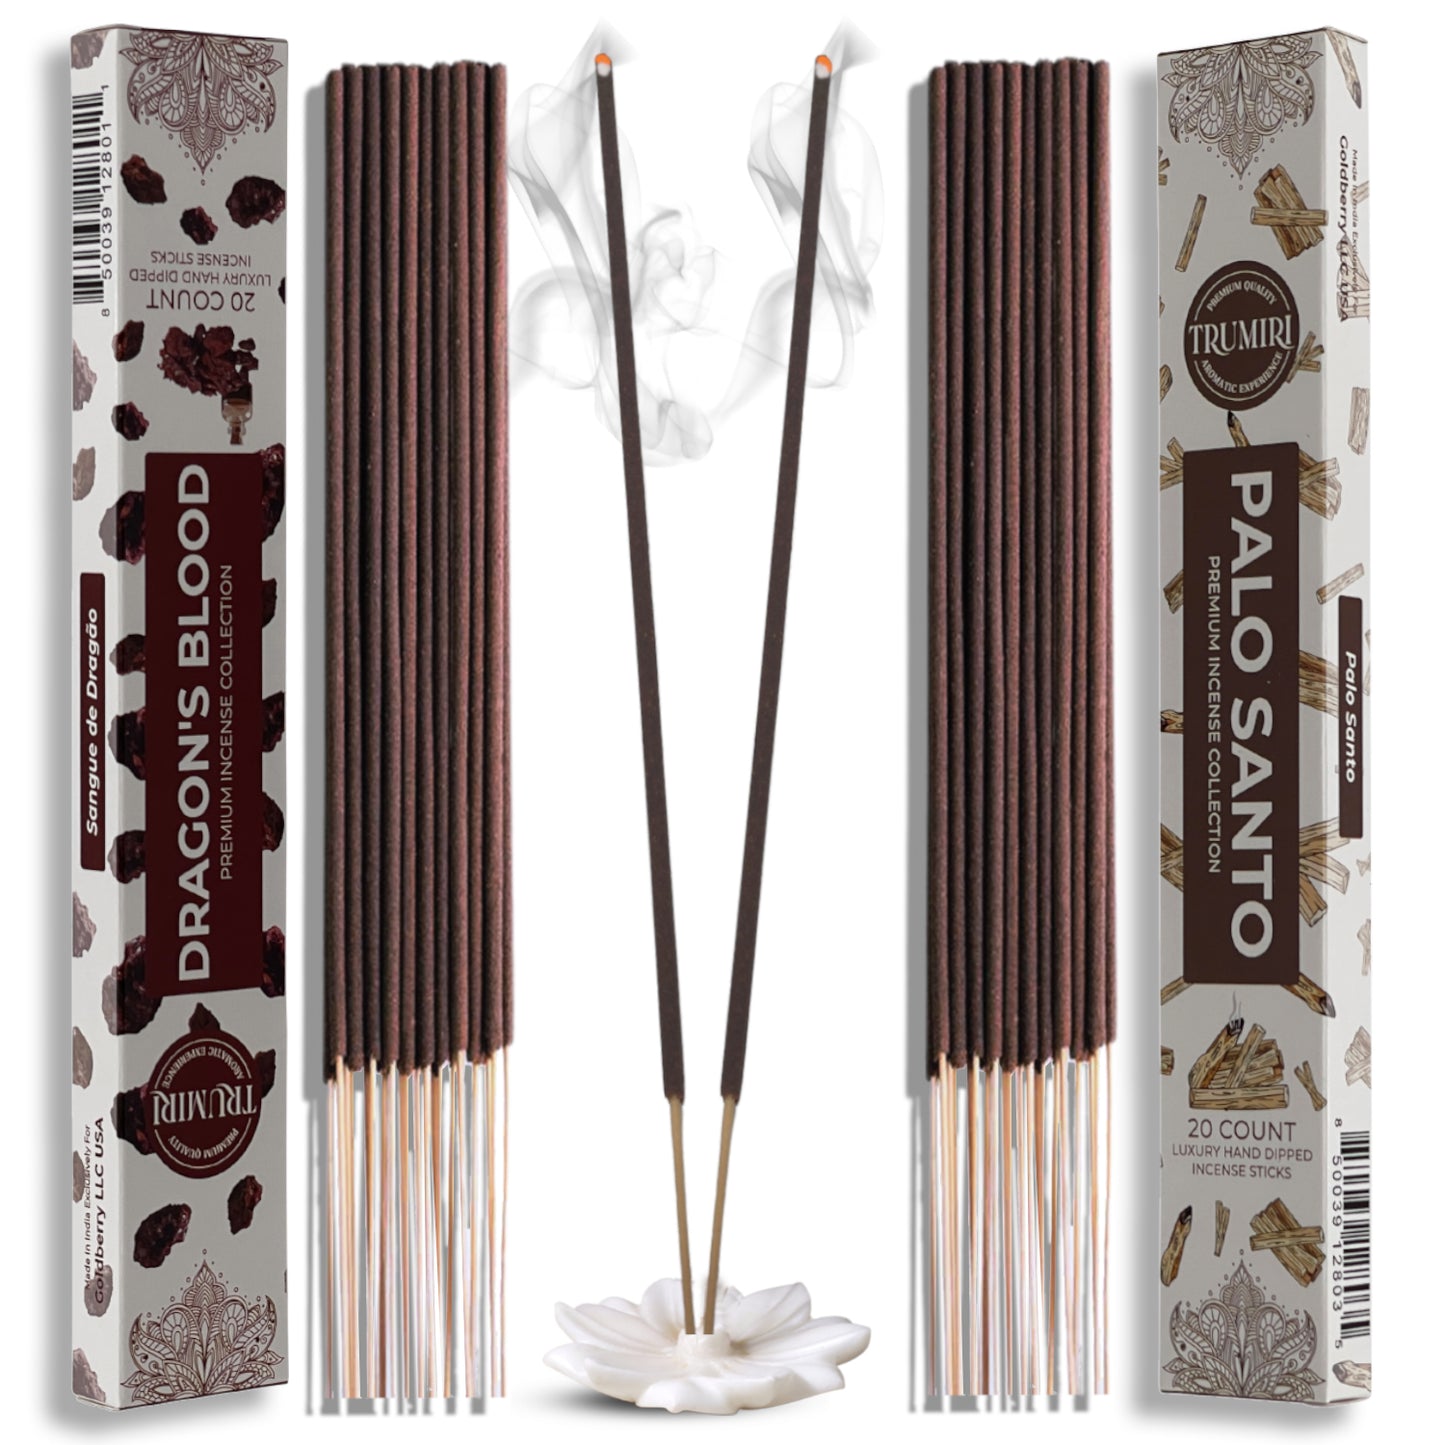 Trumiri Incense Sticks Combo Packs - 20 Sticks per Scent - Total 40 Incense Sticks